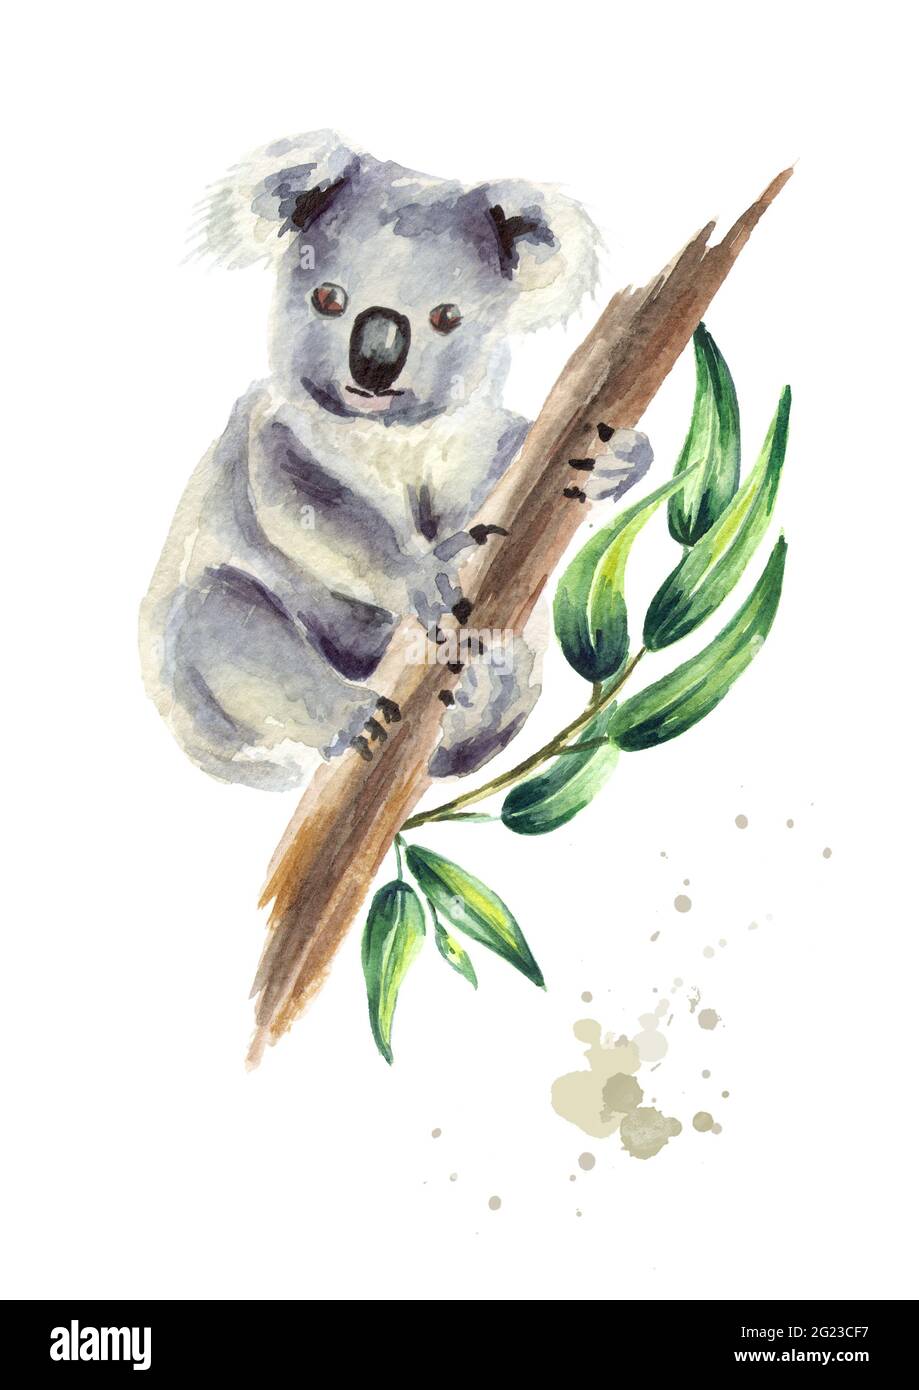 Colouring Koalas and Drop Bears with Primrosia Watercolour Brush Pens! 